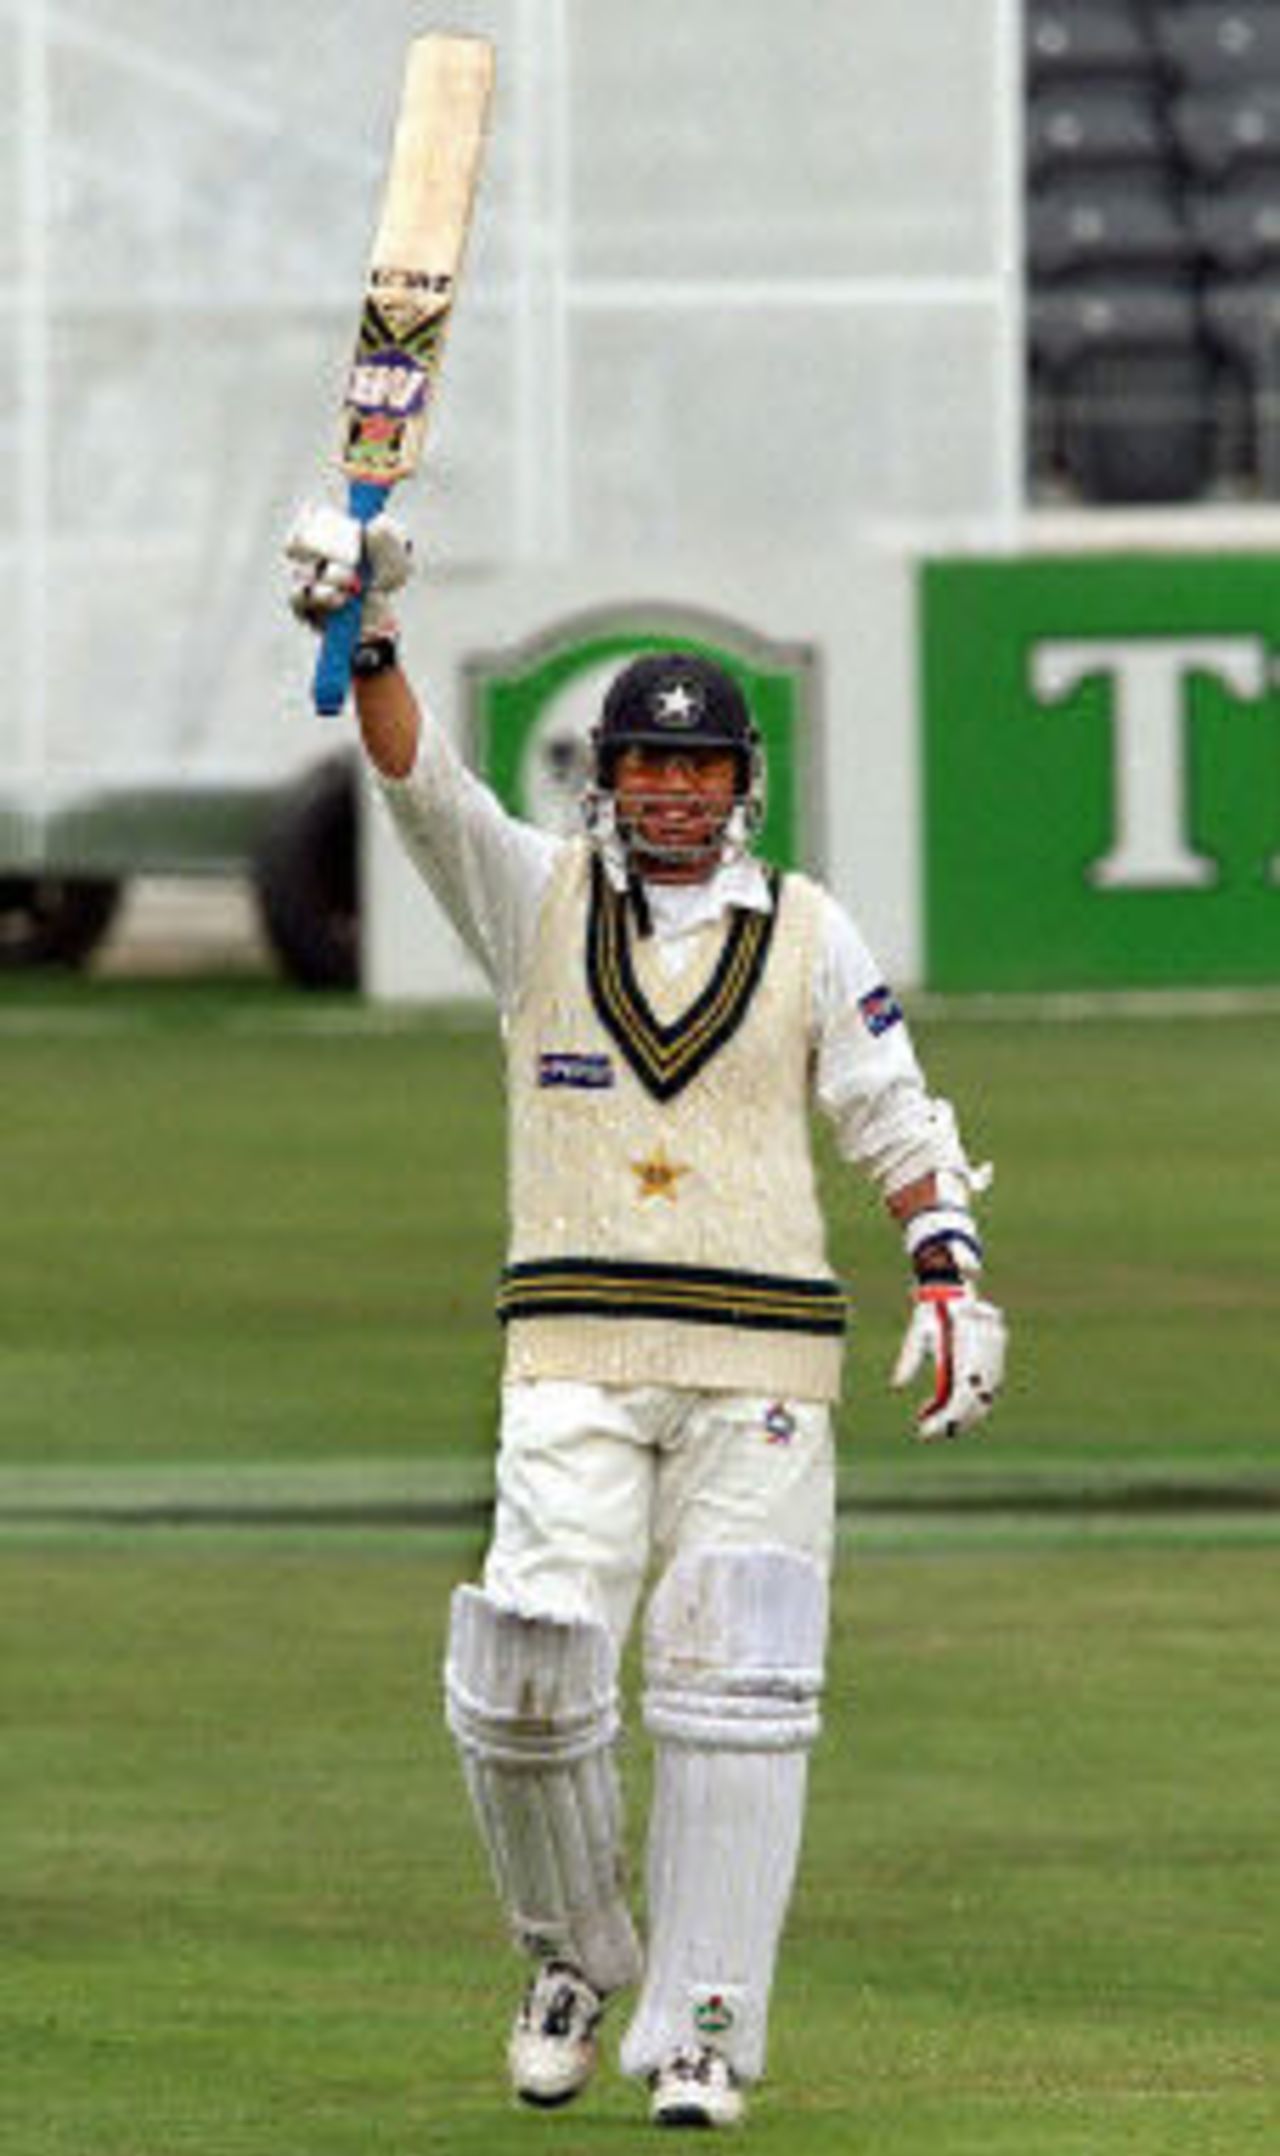 Pakistan batsman Saqlain Mushtaq celebrates scoring his first test century, day 5, 2nd Test at Christchurch, 15-19 March 2001.